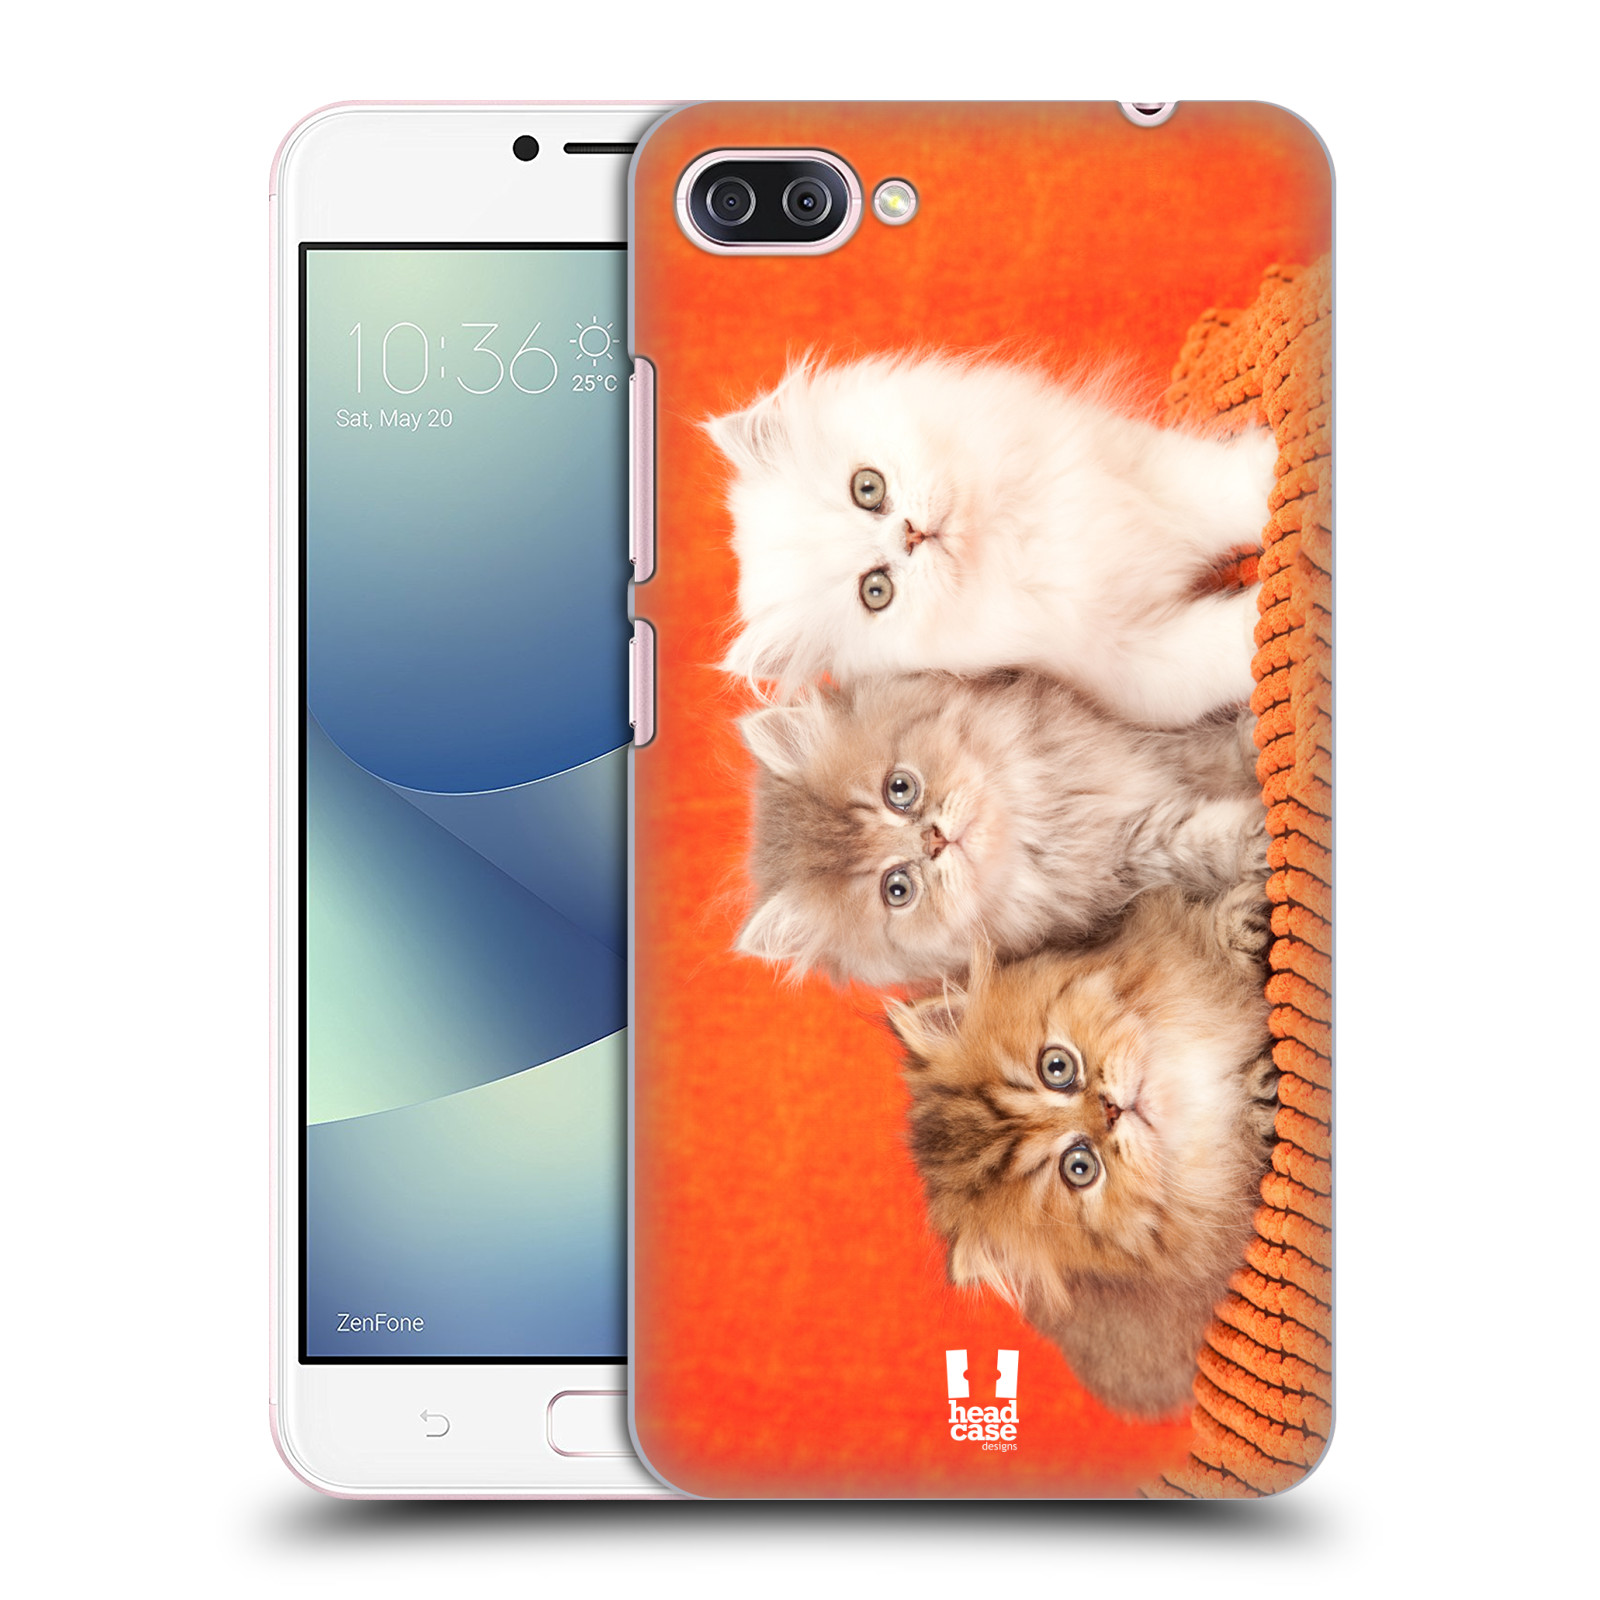 HEAD CASE plastový obal na mobil Asus Zenfone 4 MAX ZC554KL vzor Kočičky koťata foto 3 kočky